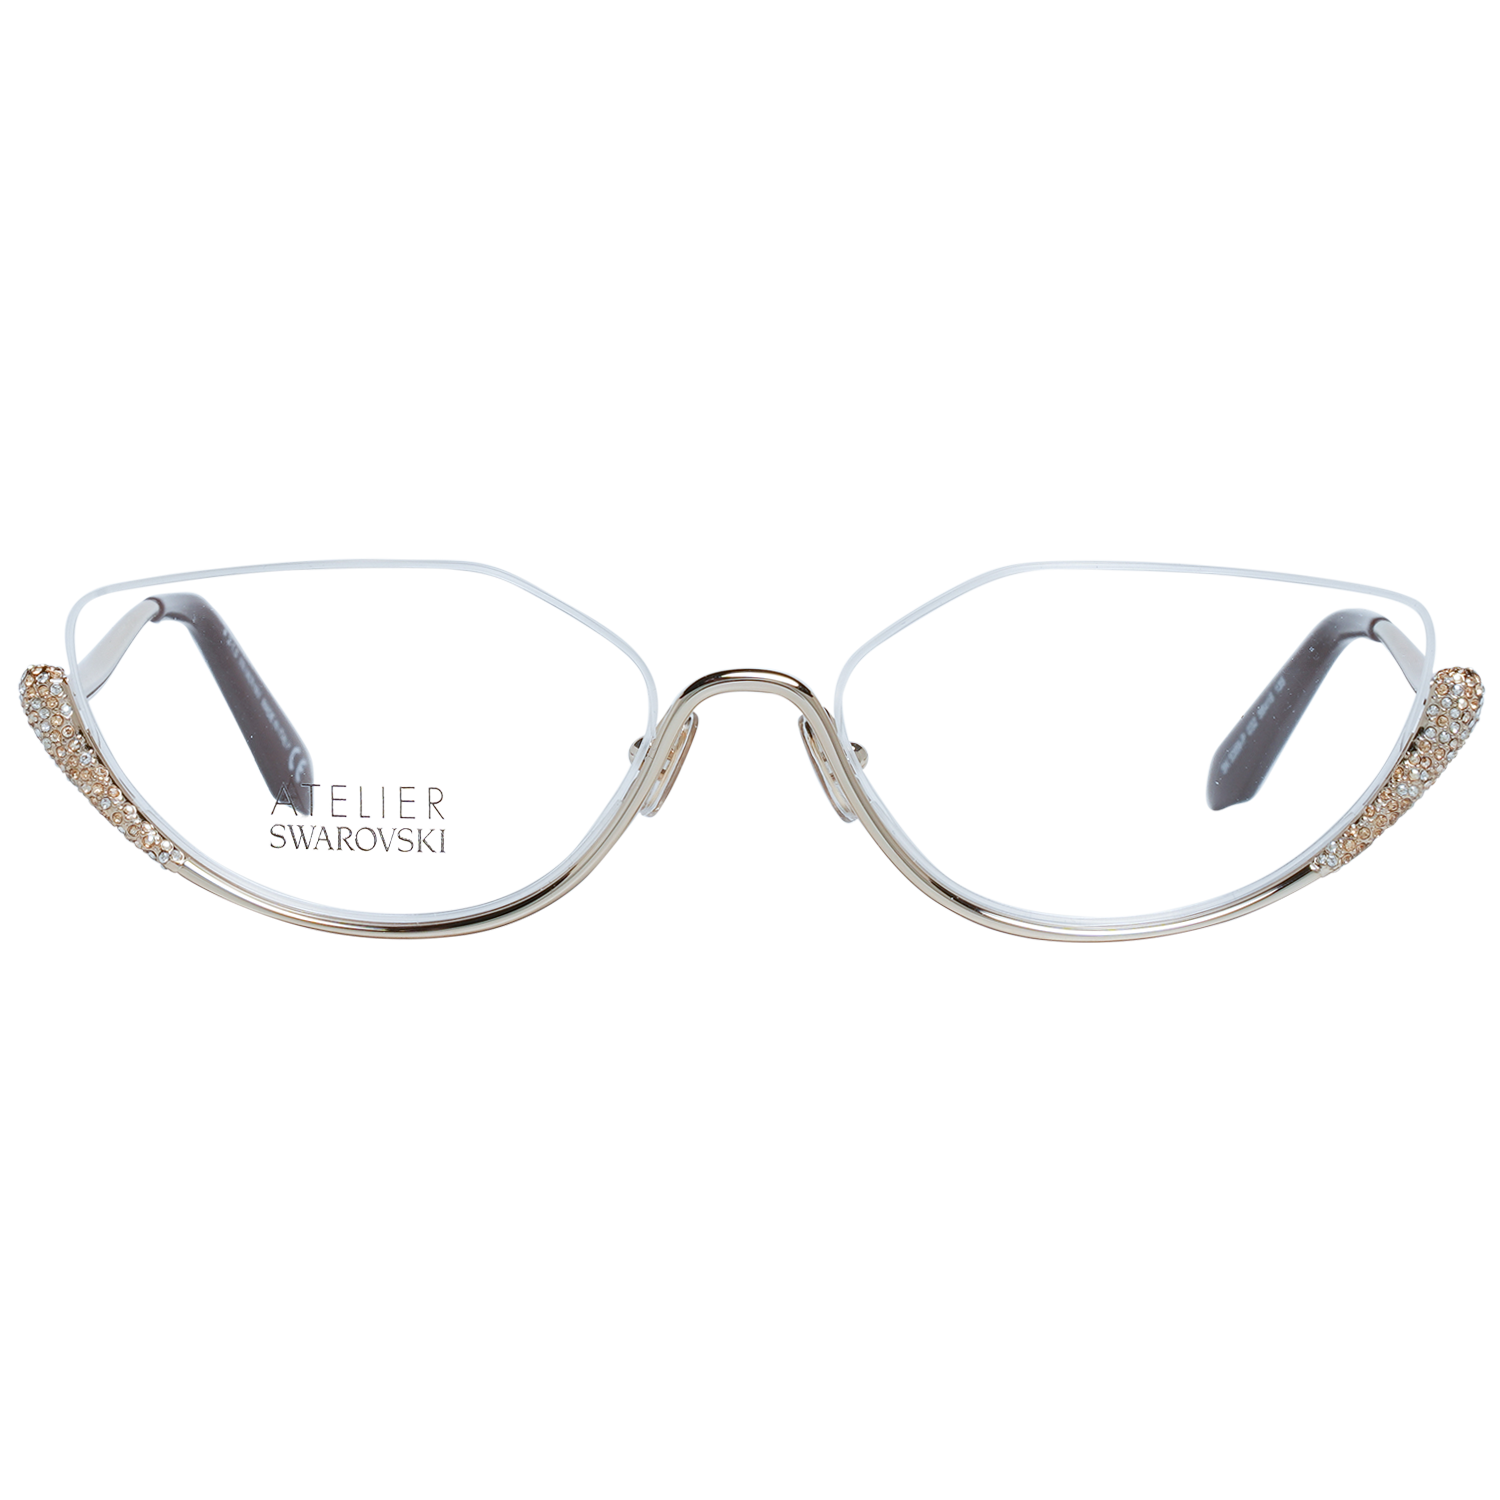 Atelier Swarovski Frames Atelier Swarovski Glasses Optical Frame SK5359-P 032 Eyeglasses Eyewear UK USA Australia 